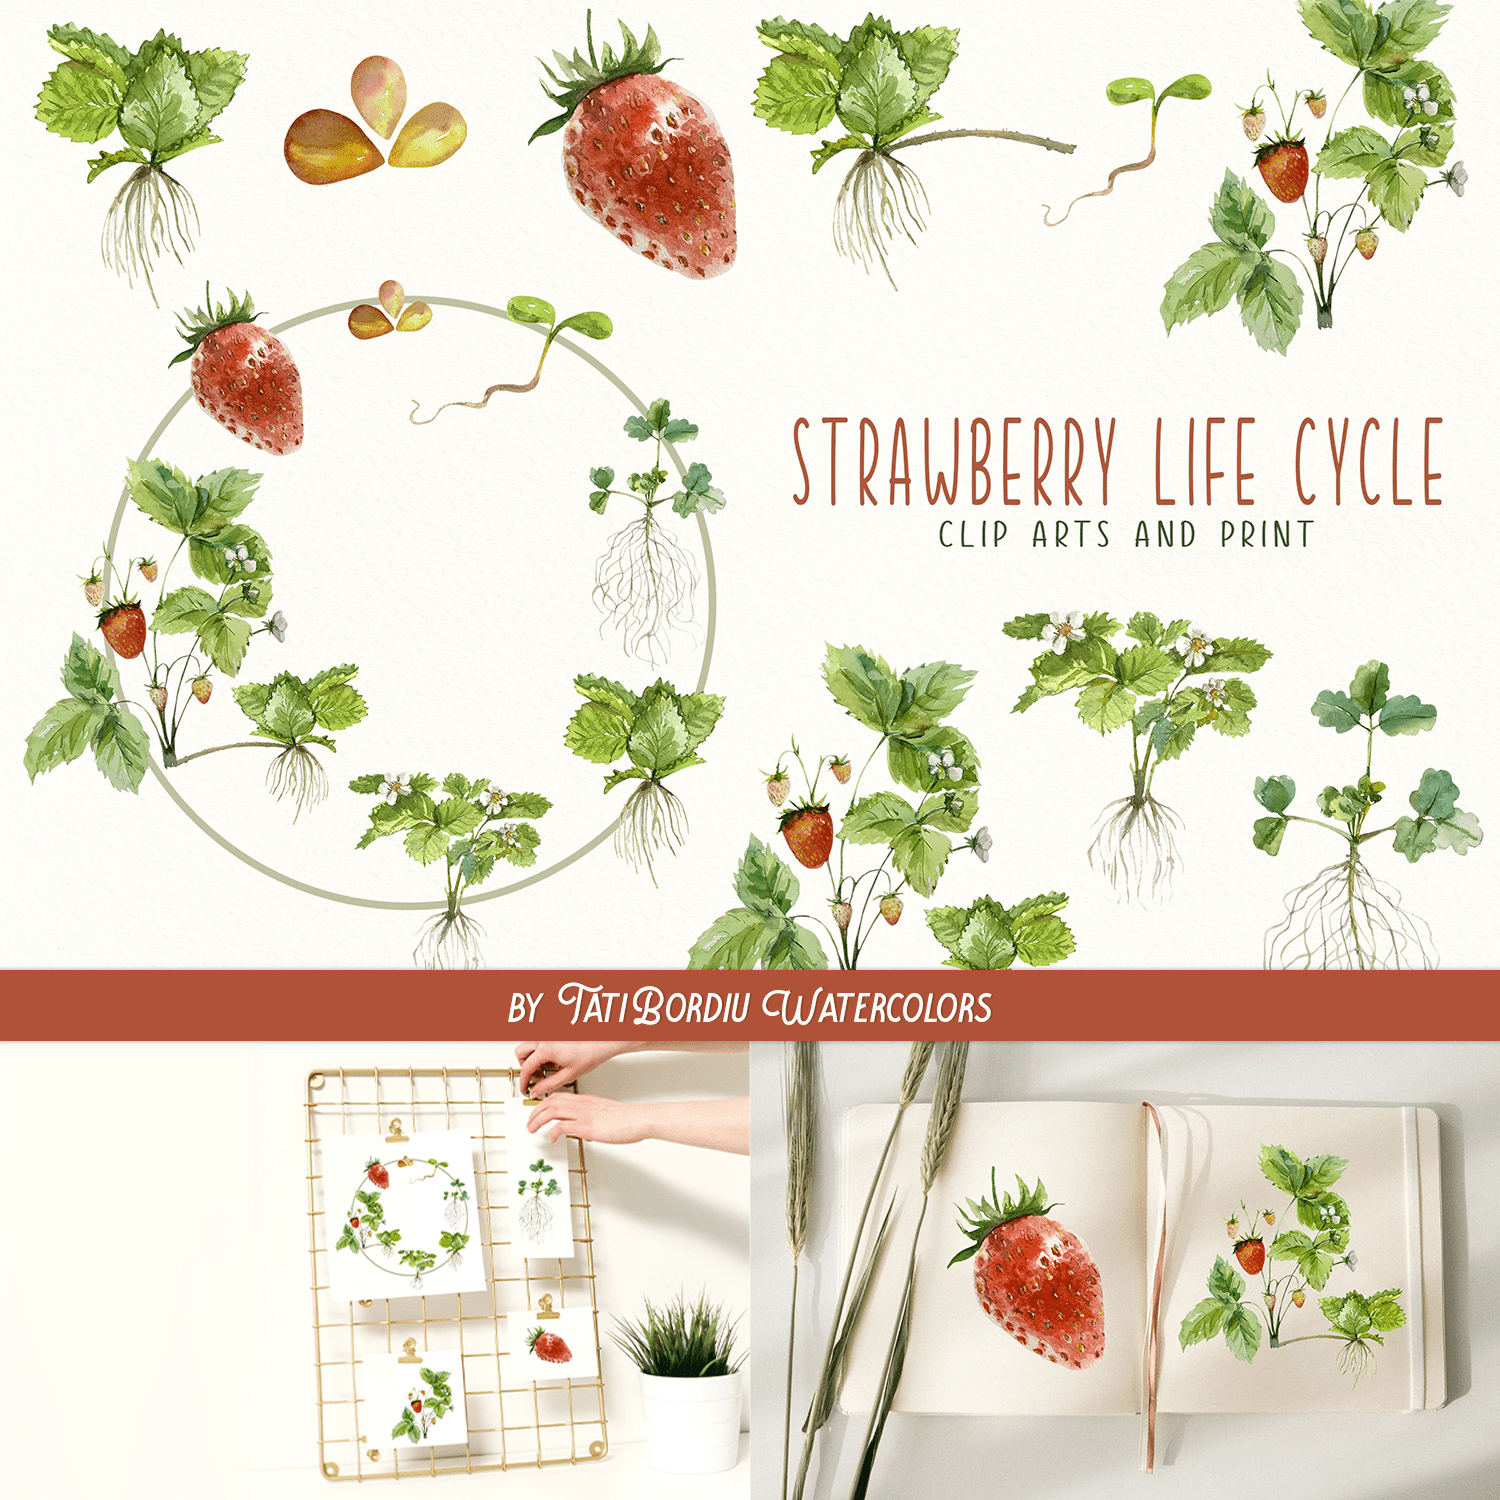 Strawberry Life Cycle Clip Arts and Print Created By TatiBordiu Watercolors.